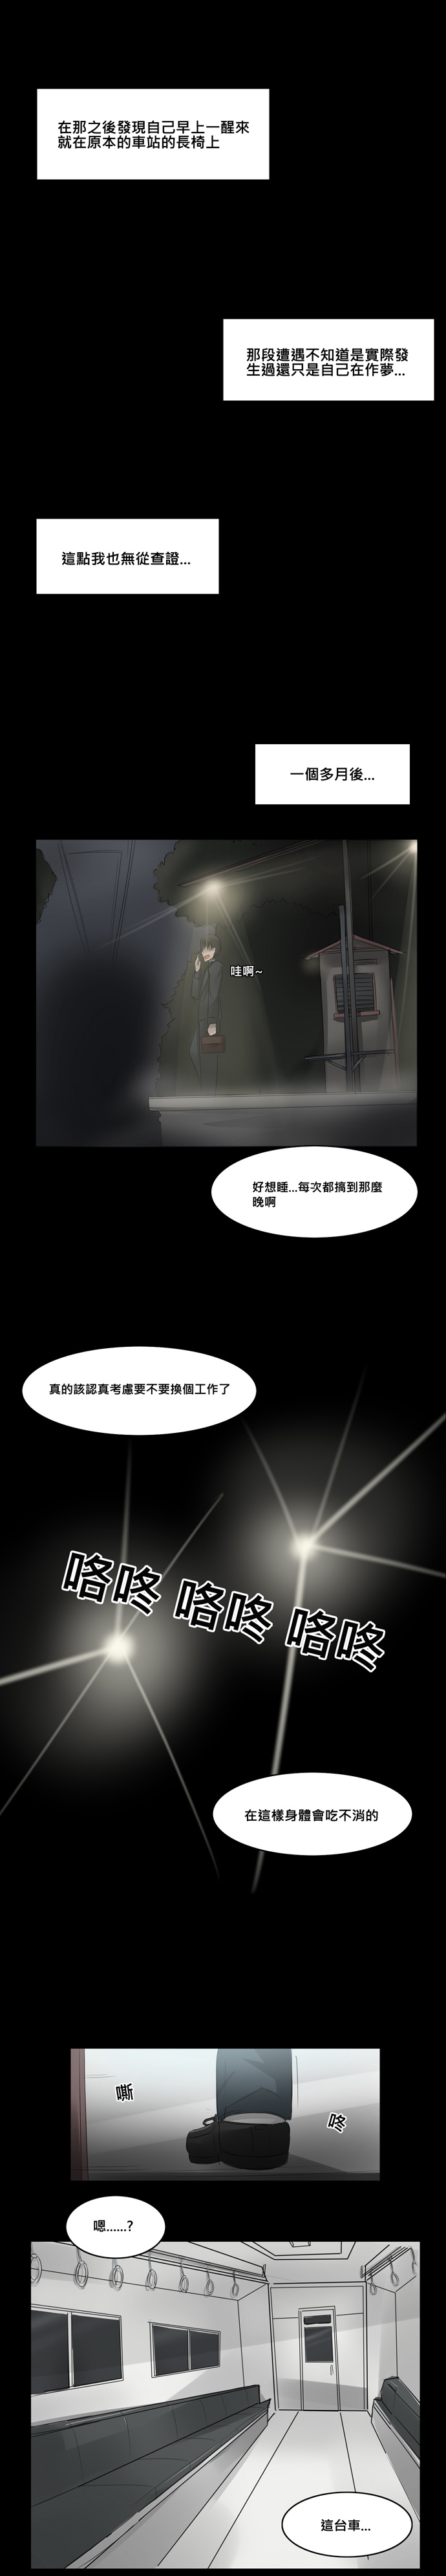 [Lu Renbing]深夜列車的都市傳說...應衝吧（橫條式由左至右閱讀